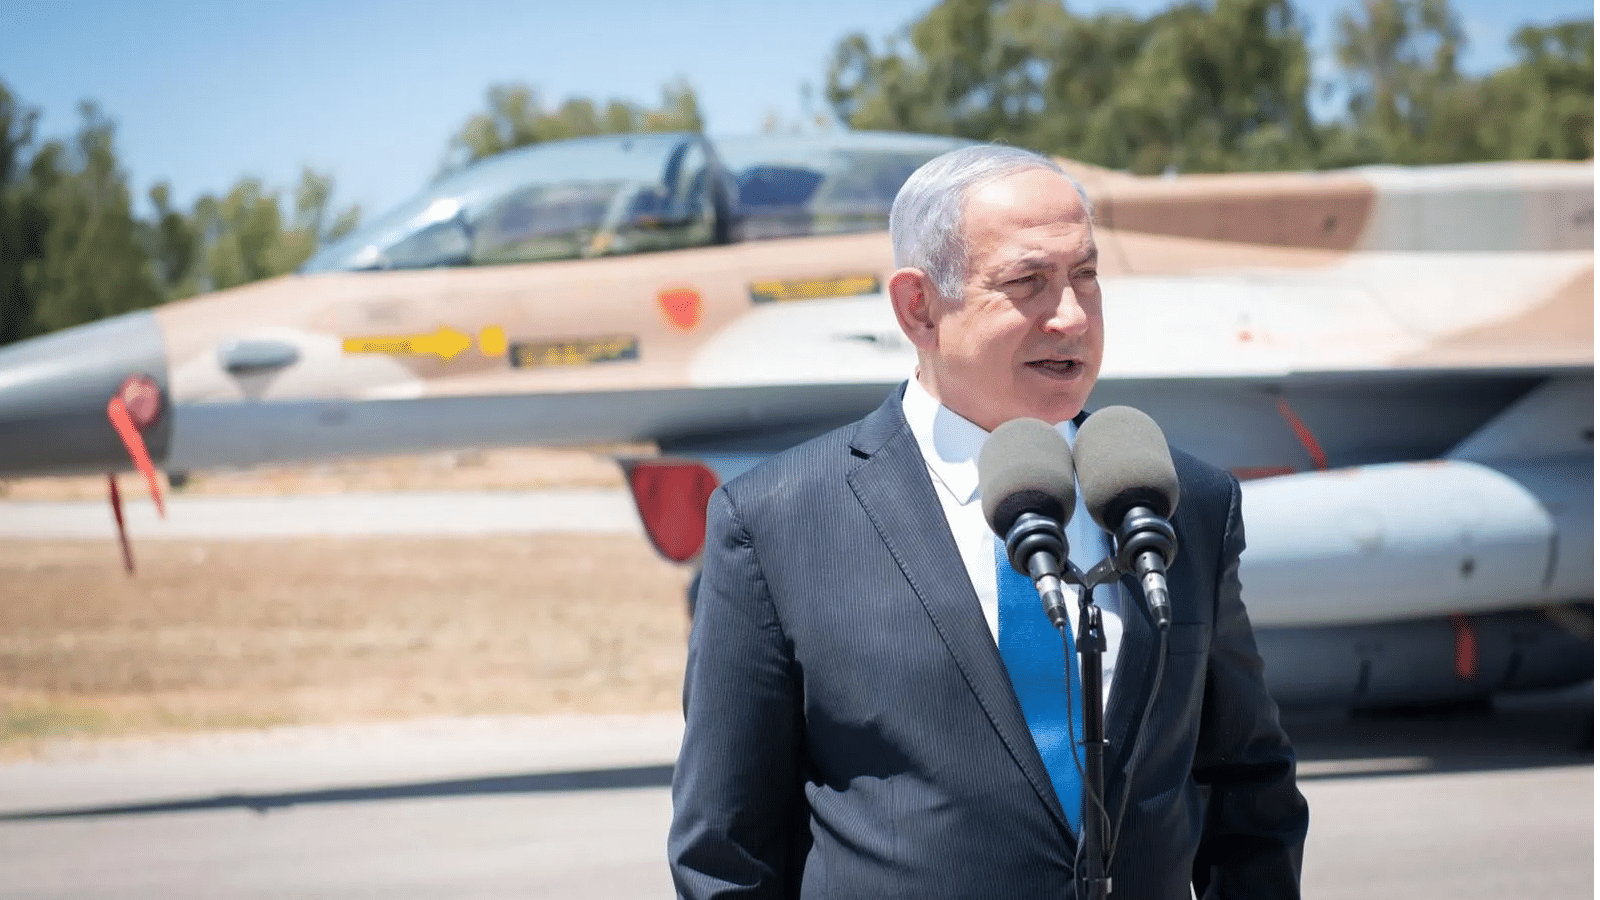 Wife’s hospitalisation delays Israel PM, Benjamin Netanyahu’s potential visit to UAE